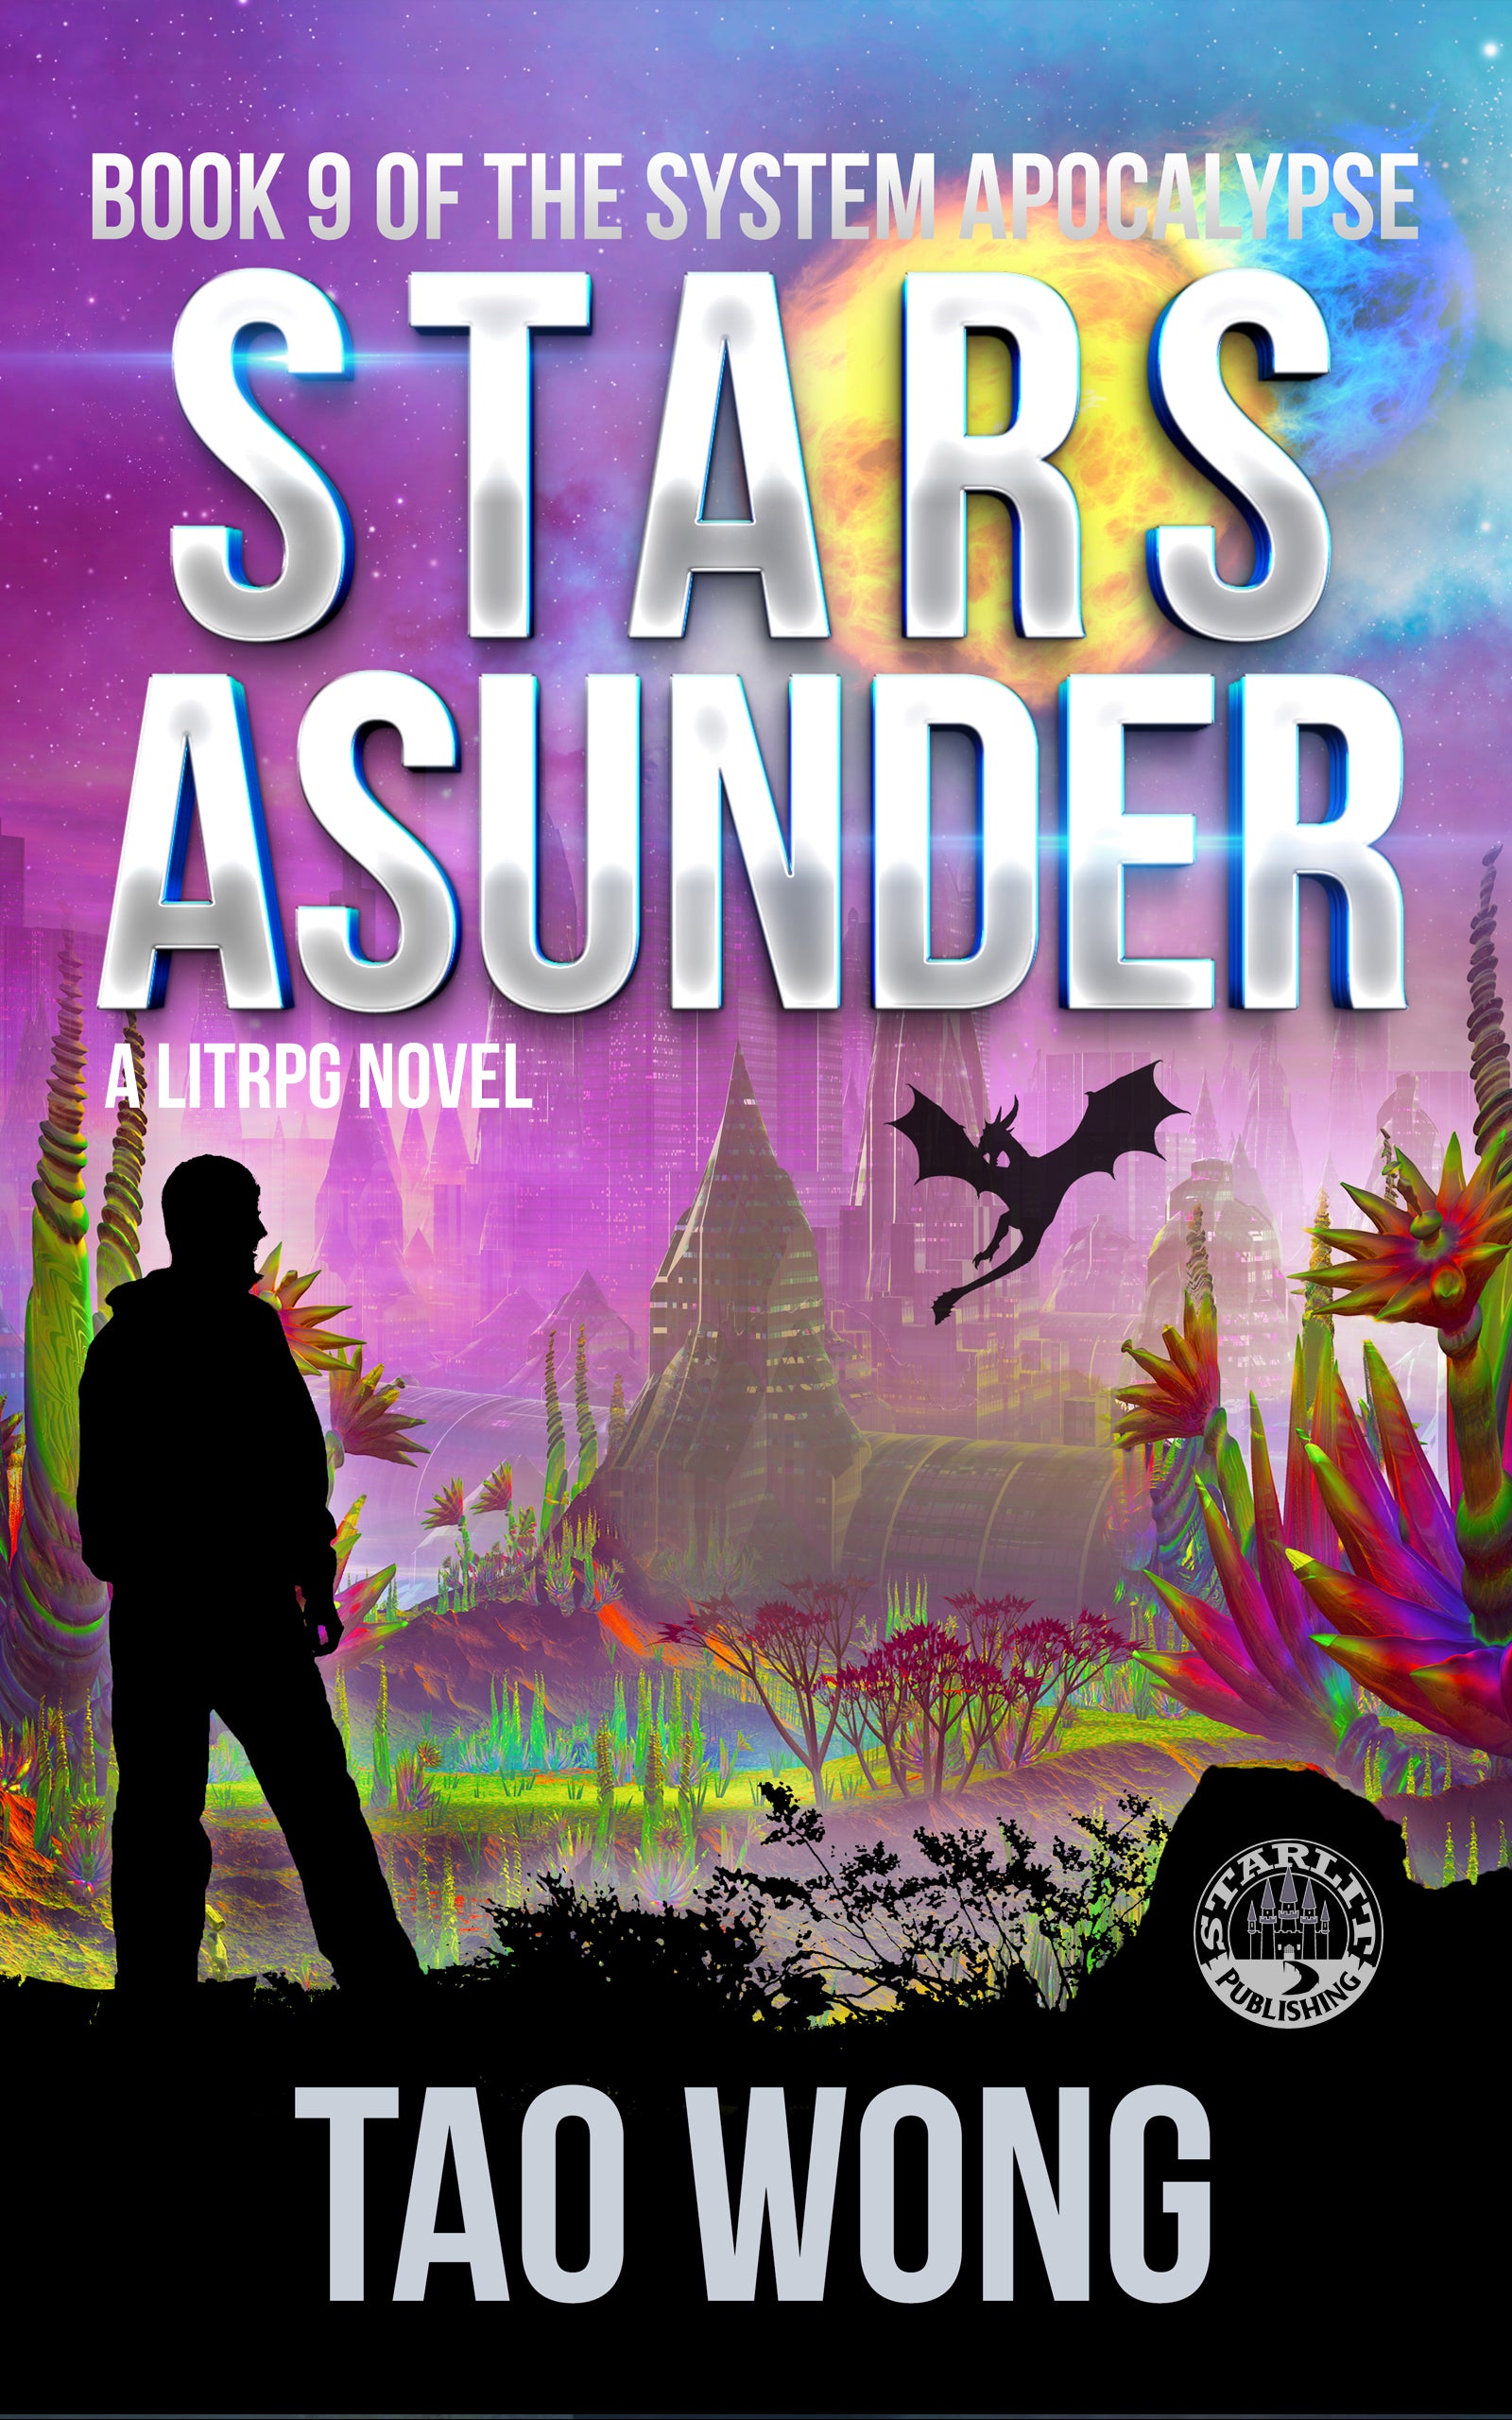 The System Apocalypse: Stars Asunder (book 9)